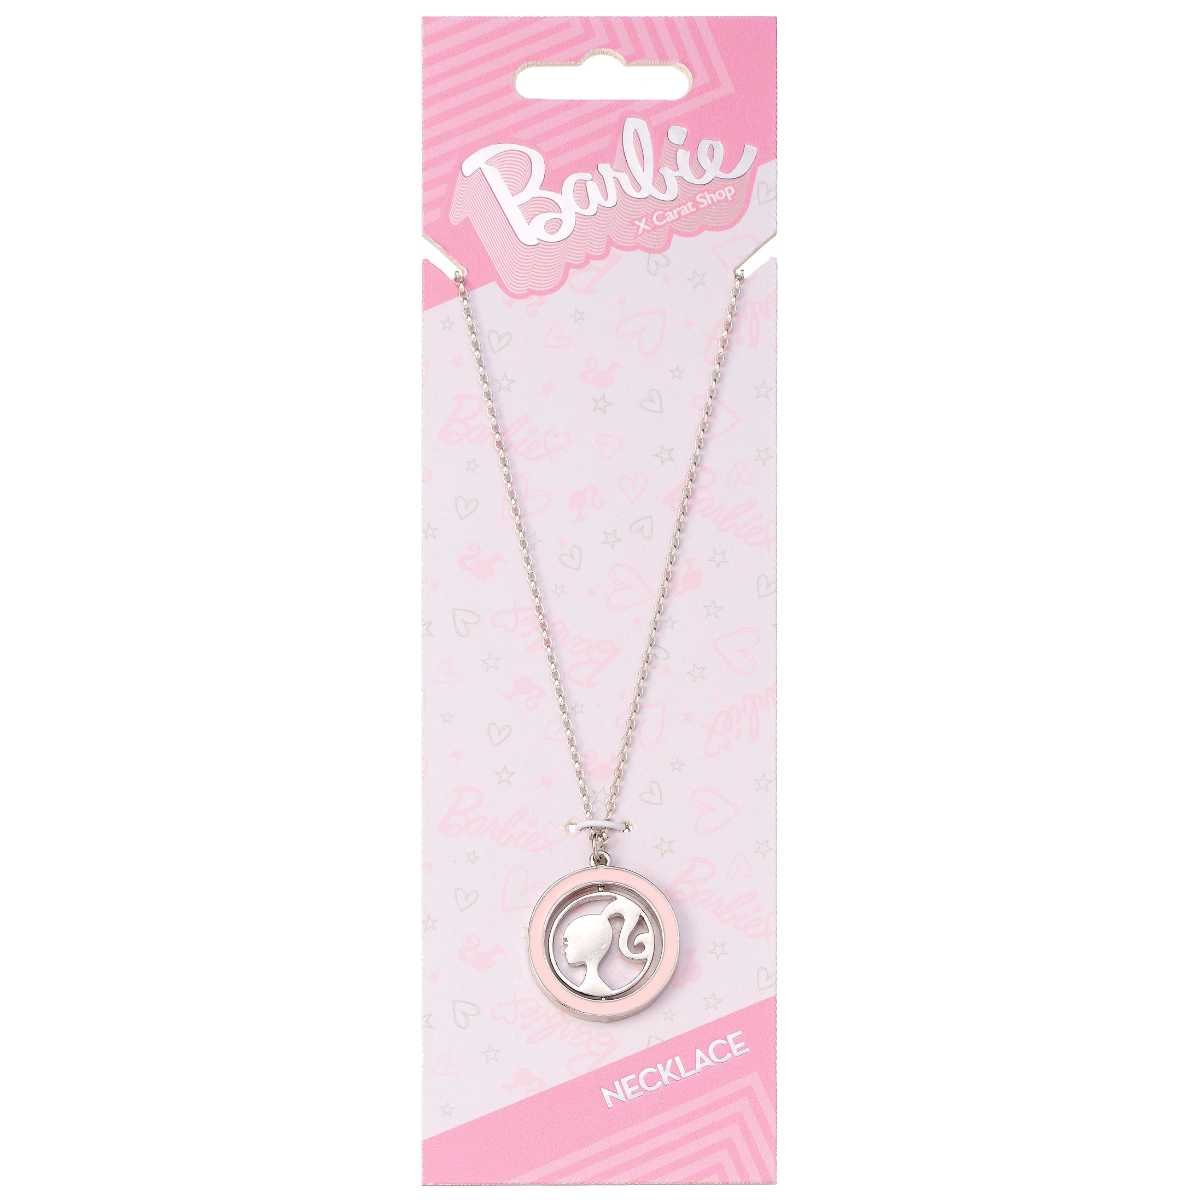 Barbie™️ Spinning Silhouette Necklace - Barbie x Carat Shop - Simon's Collectibles